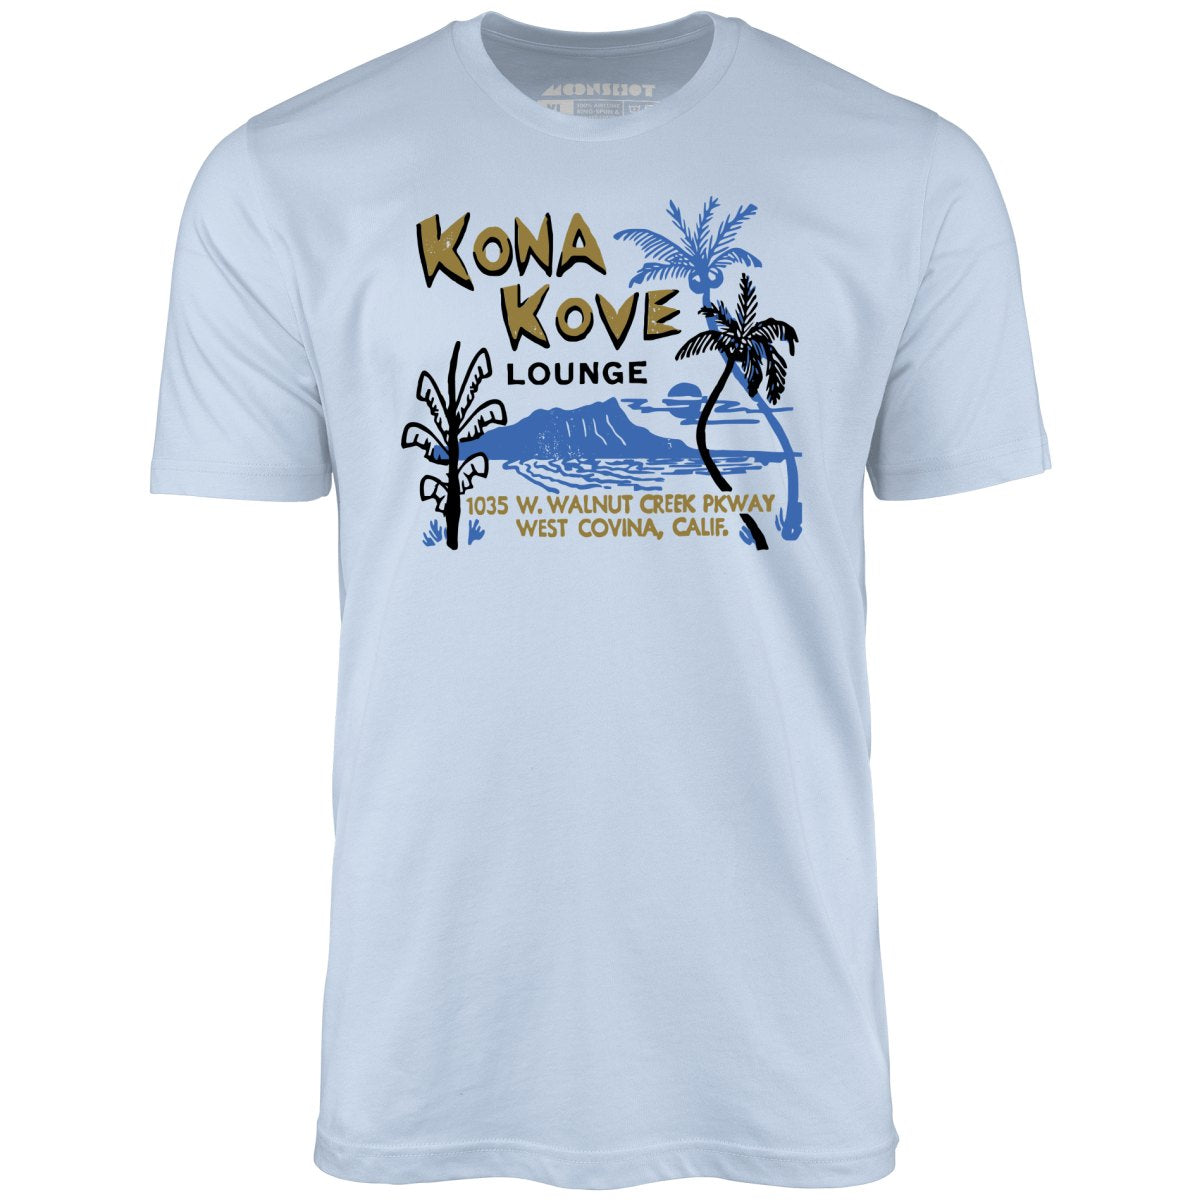 Kona Kove Lounge - West Covina, CA - Vintage Tiki Bar - Unisex T-Shirt